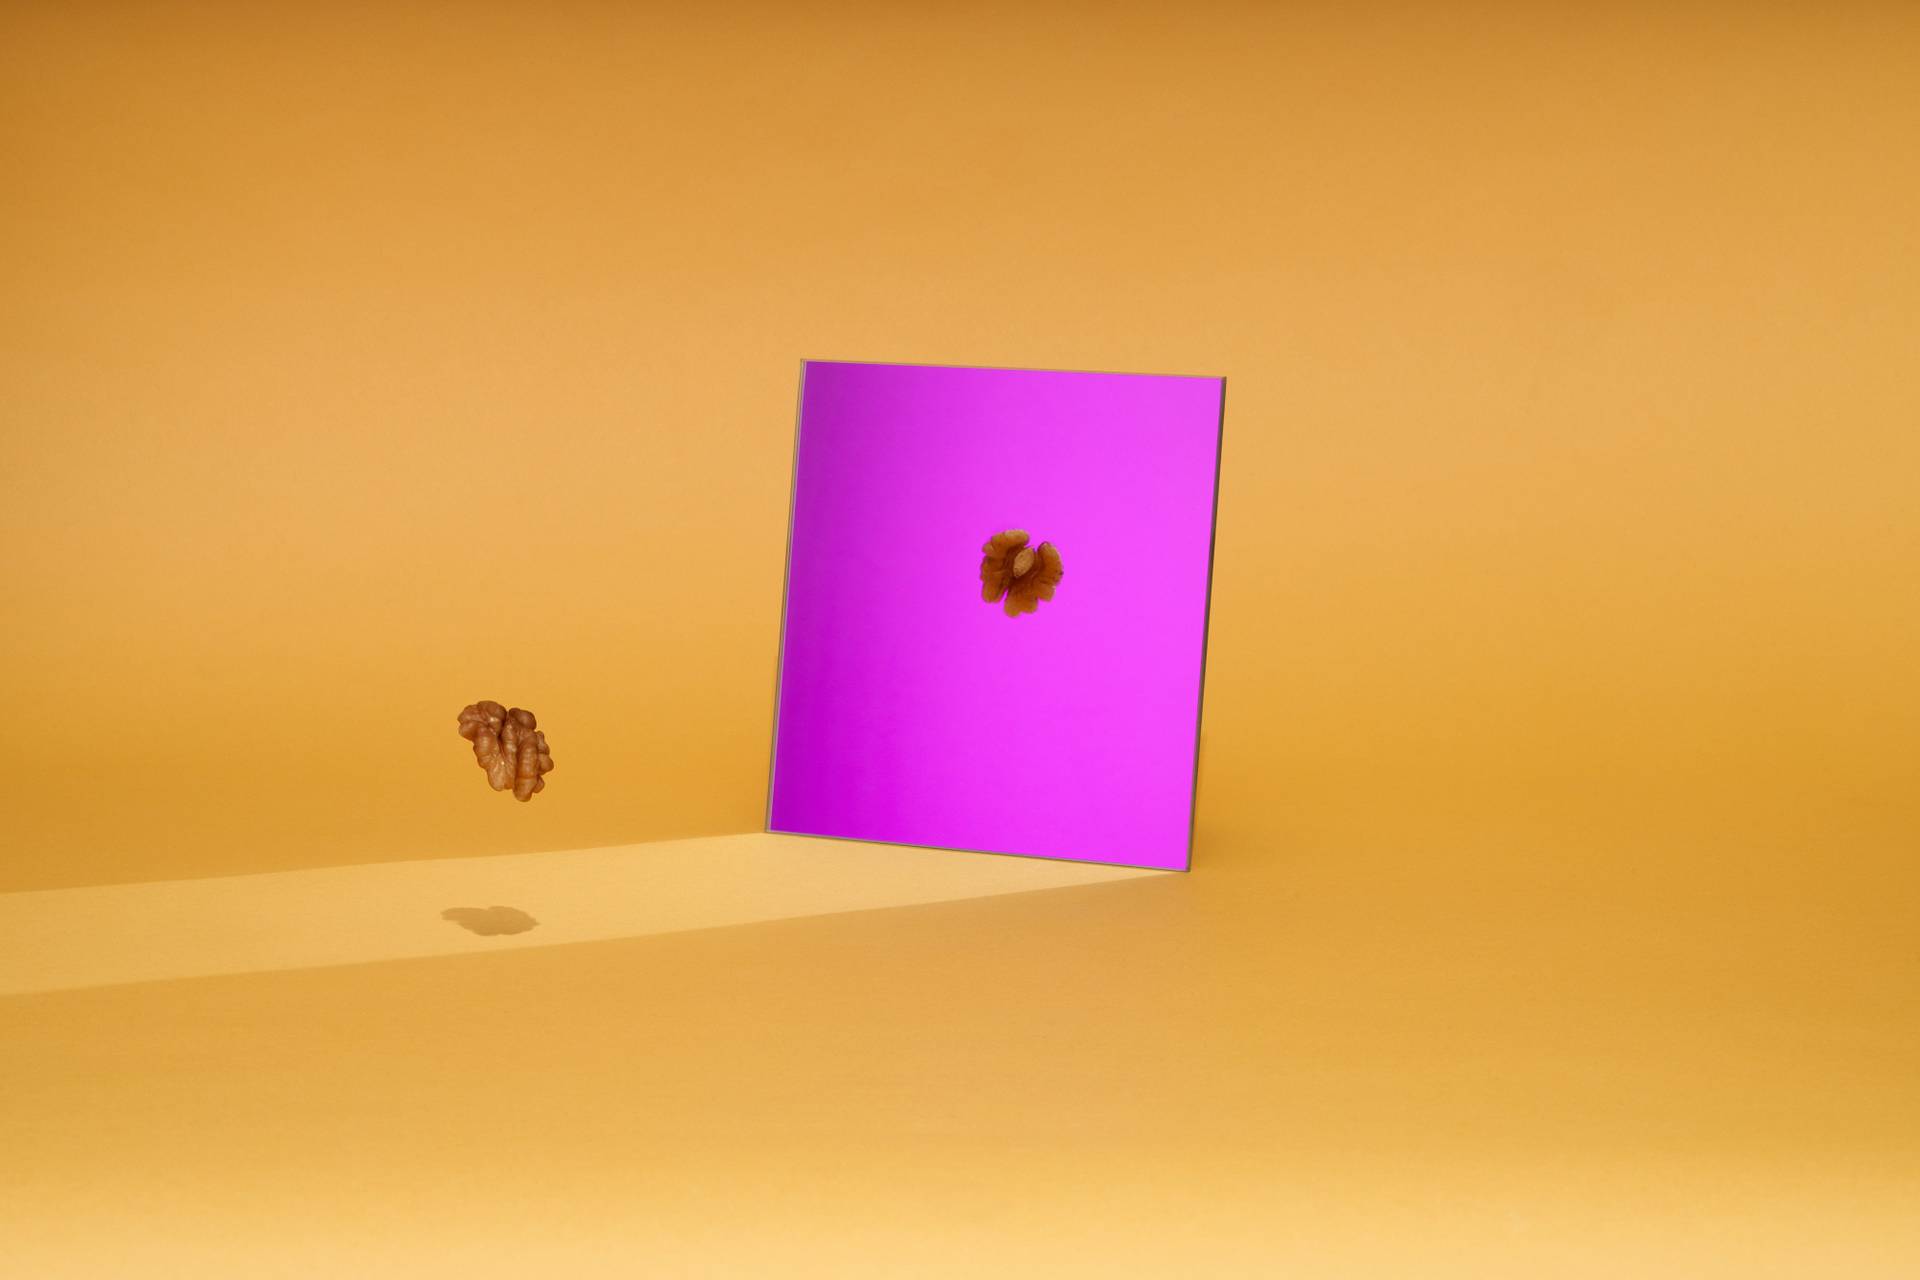 walnut with purple mirror on yellow background